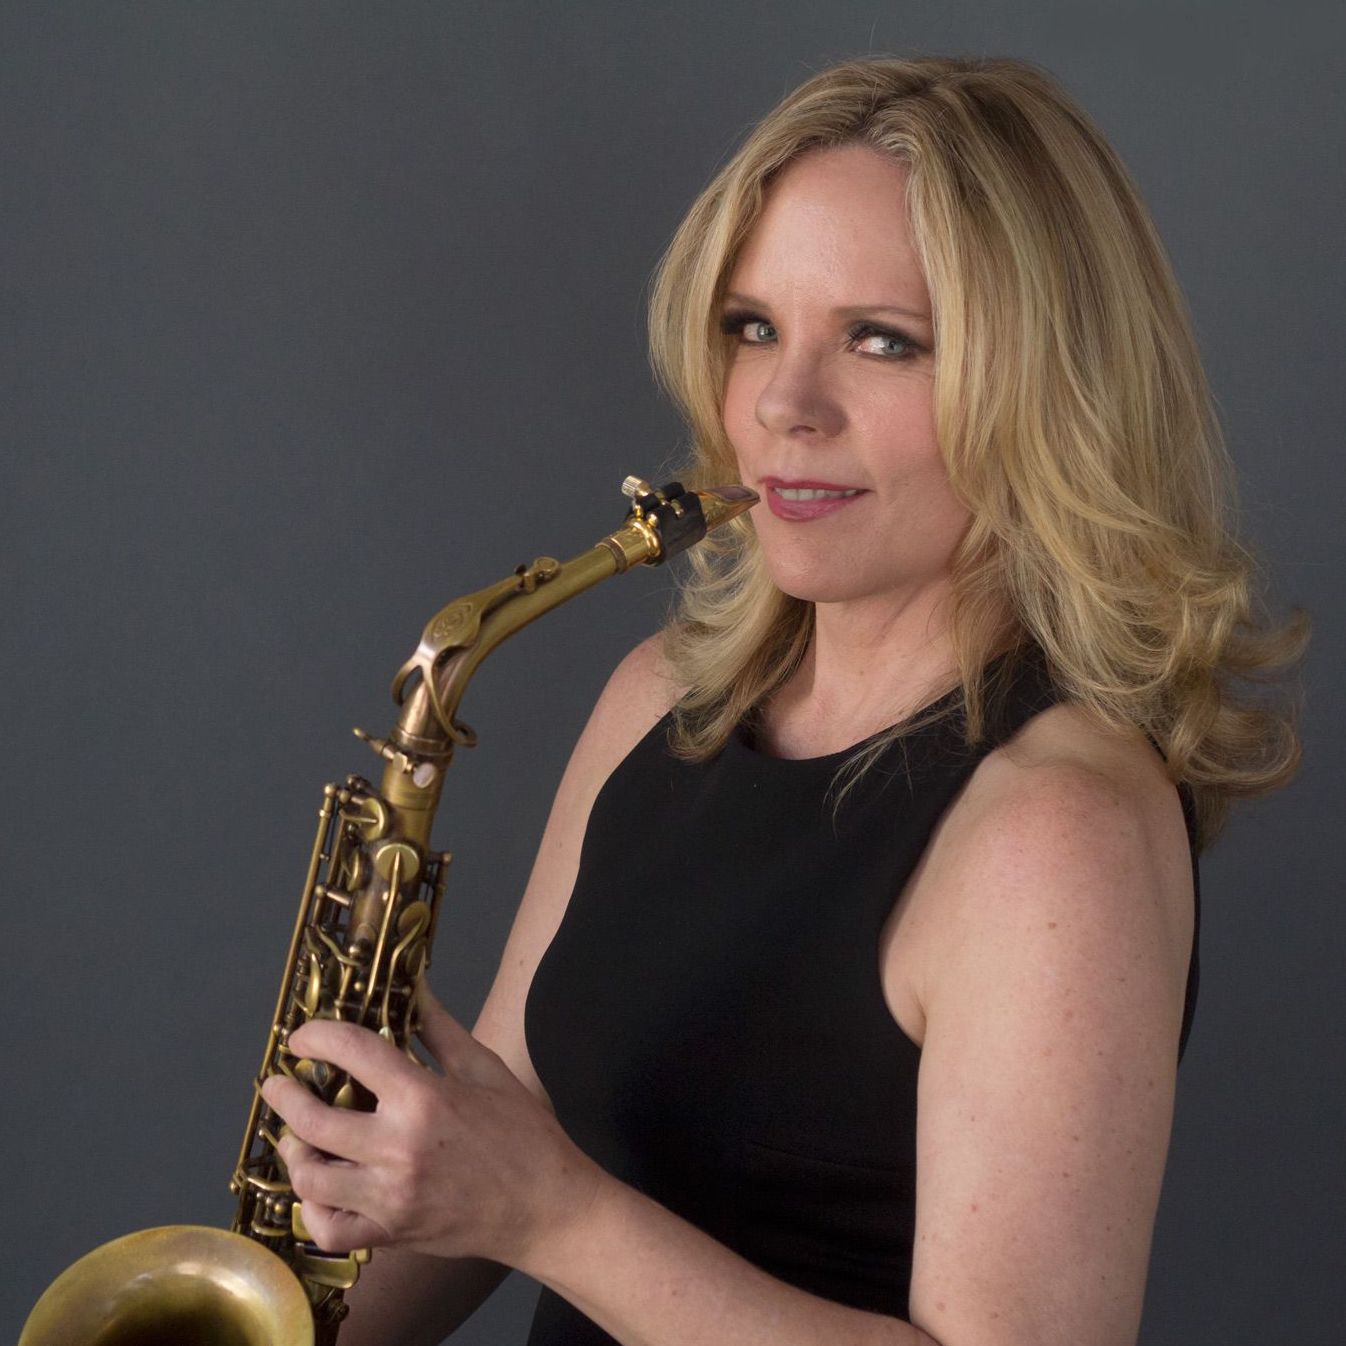 Laura Dreyer saxophone